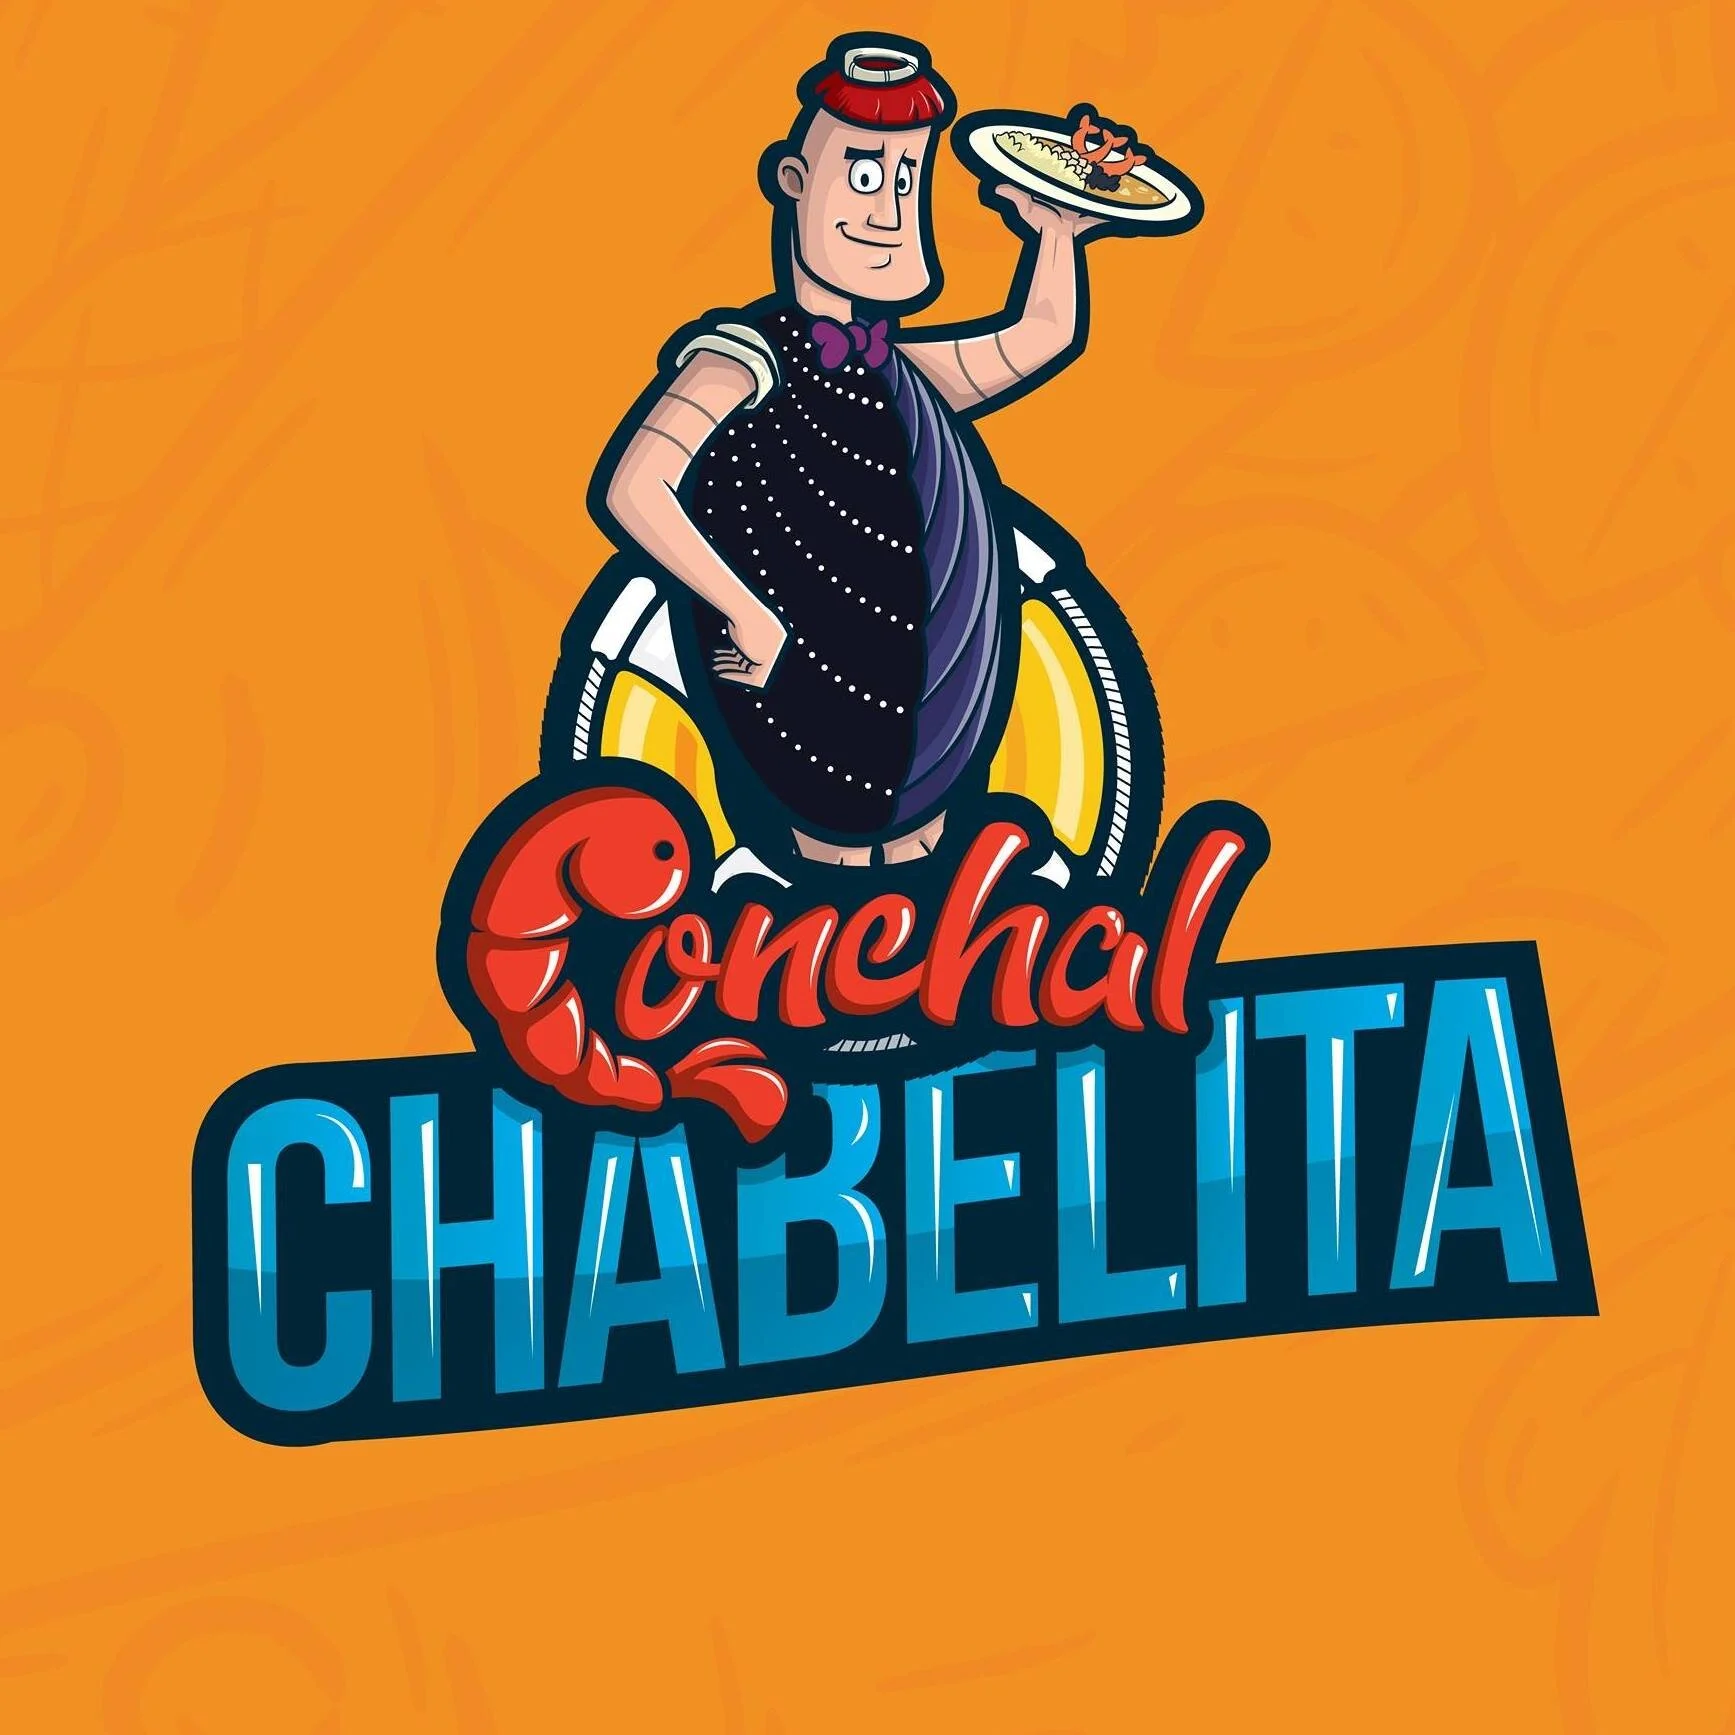 Restaurantes-conchal-chabelita-19196